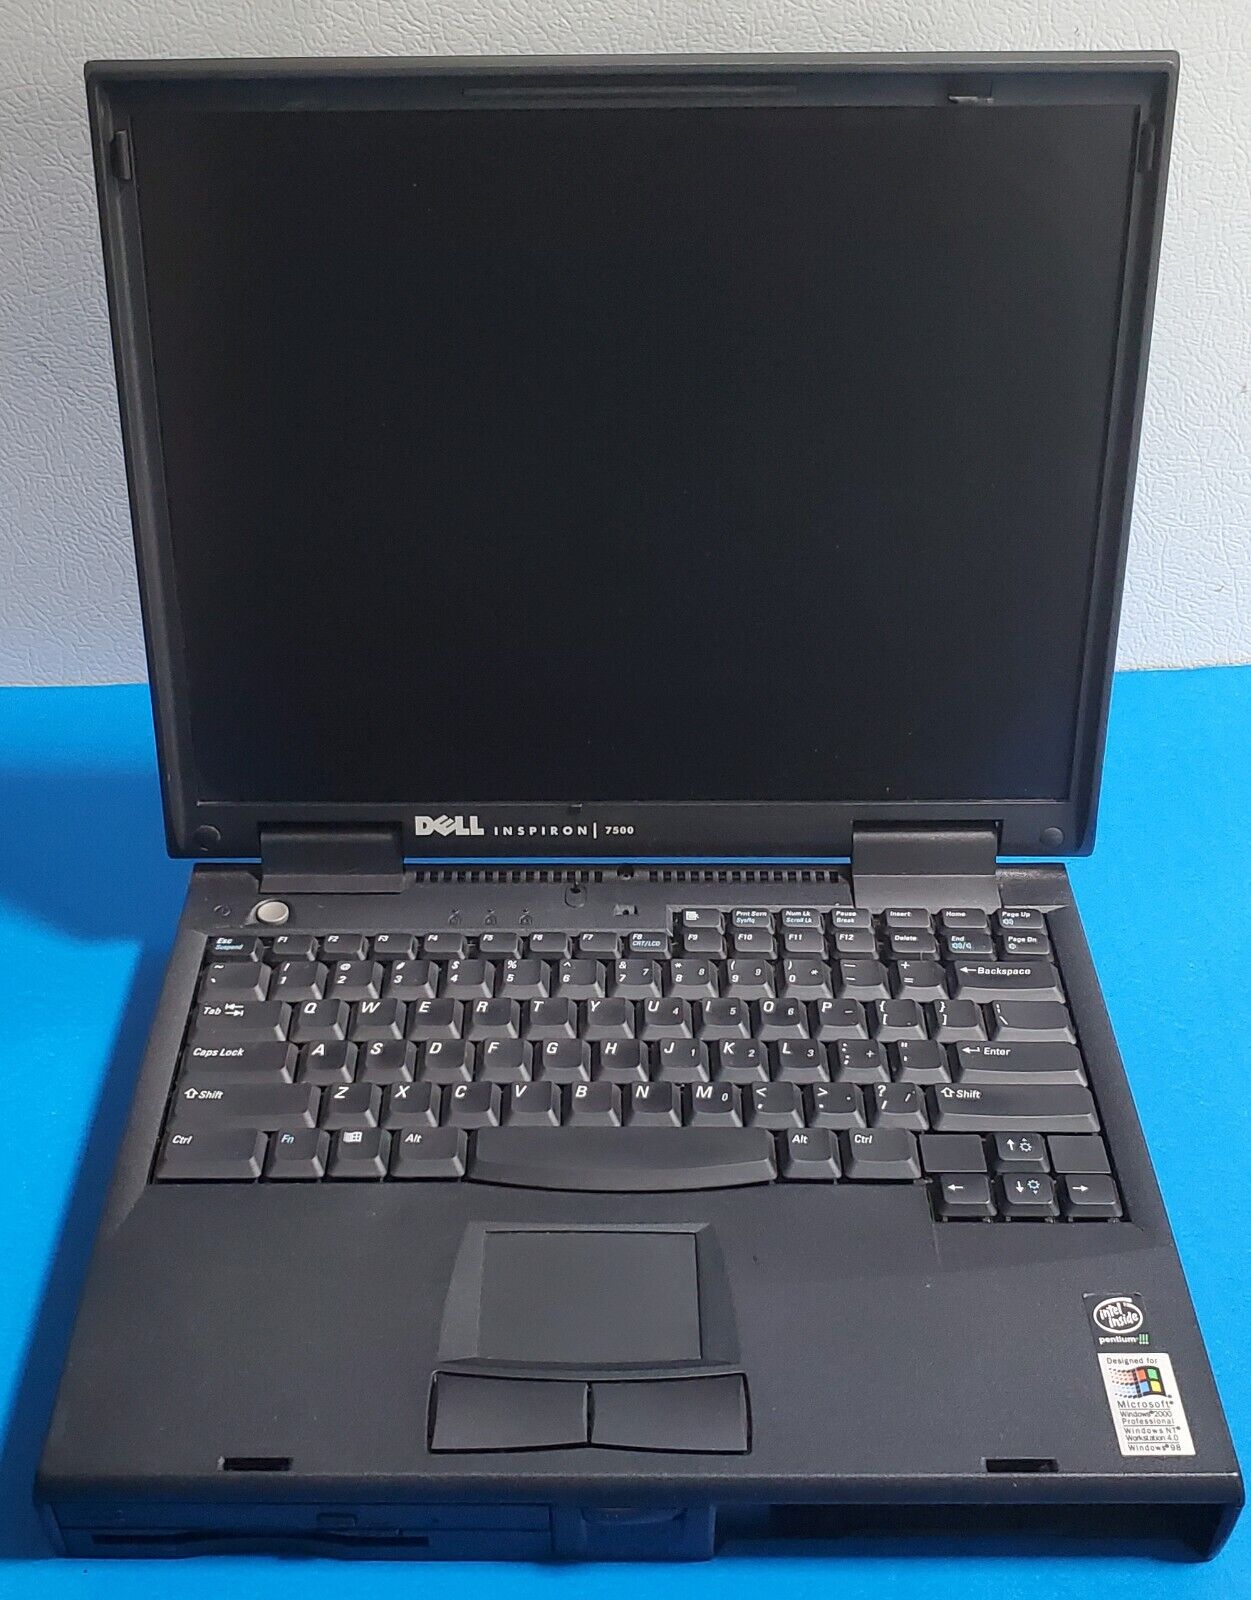 Dell Inspiron 7500 Model PPI Vintage Laptop Pentium III 15